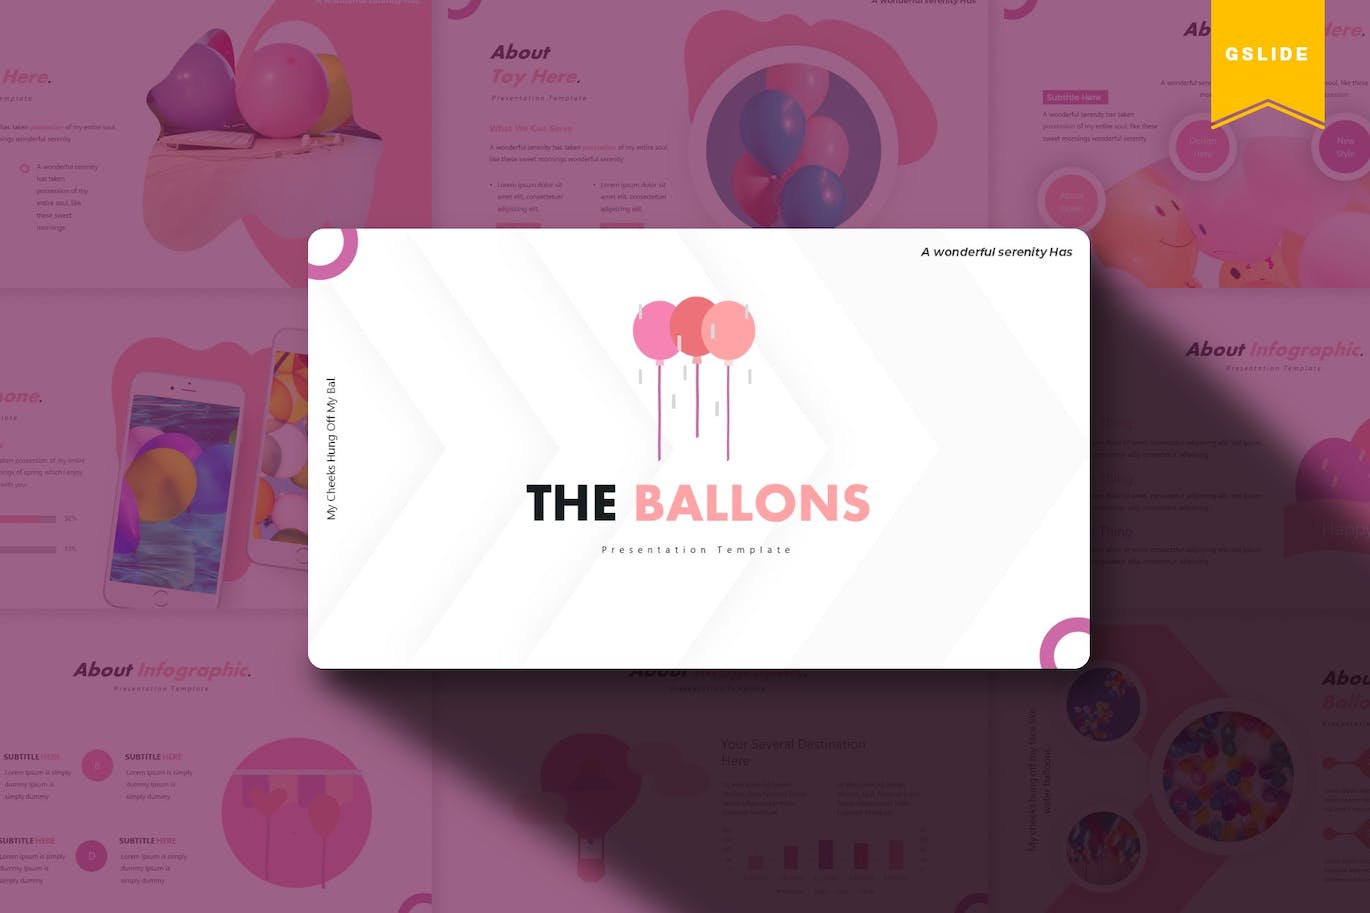 Bundle of images of amazing balloon presentation template slides.